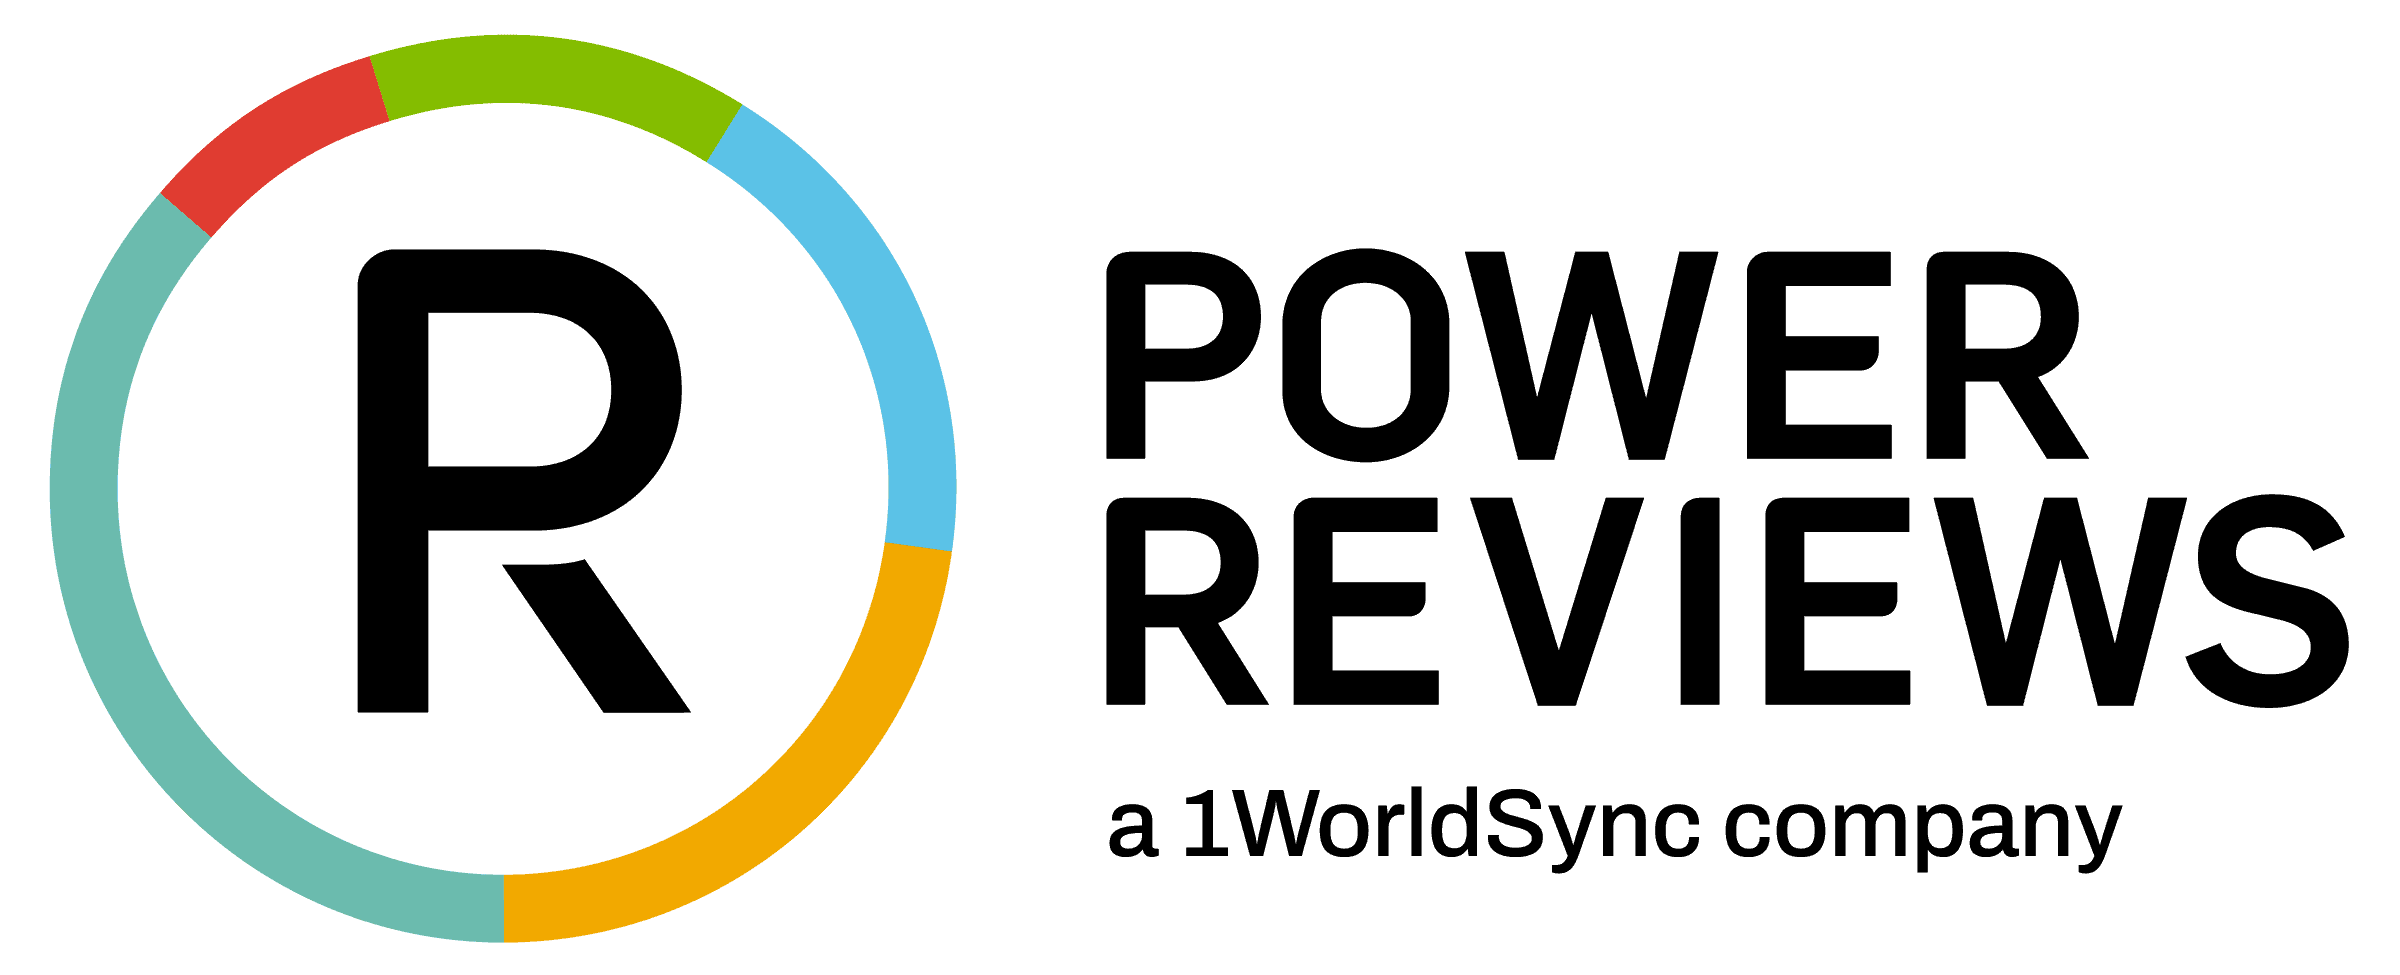 PowerReviews logo